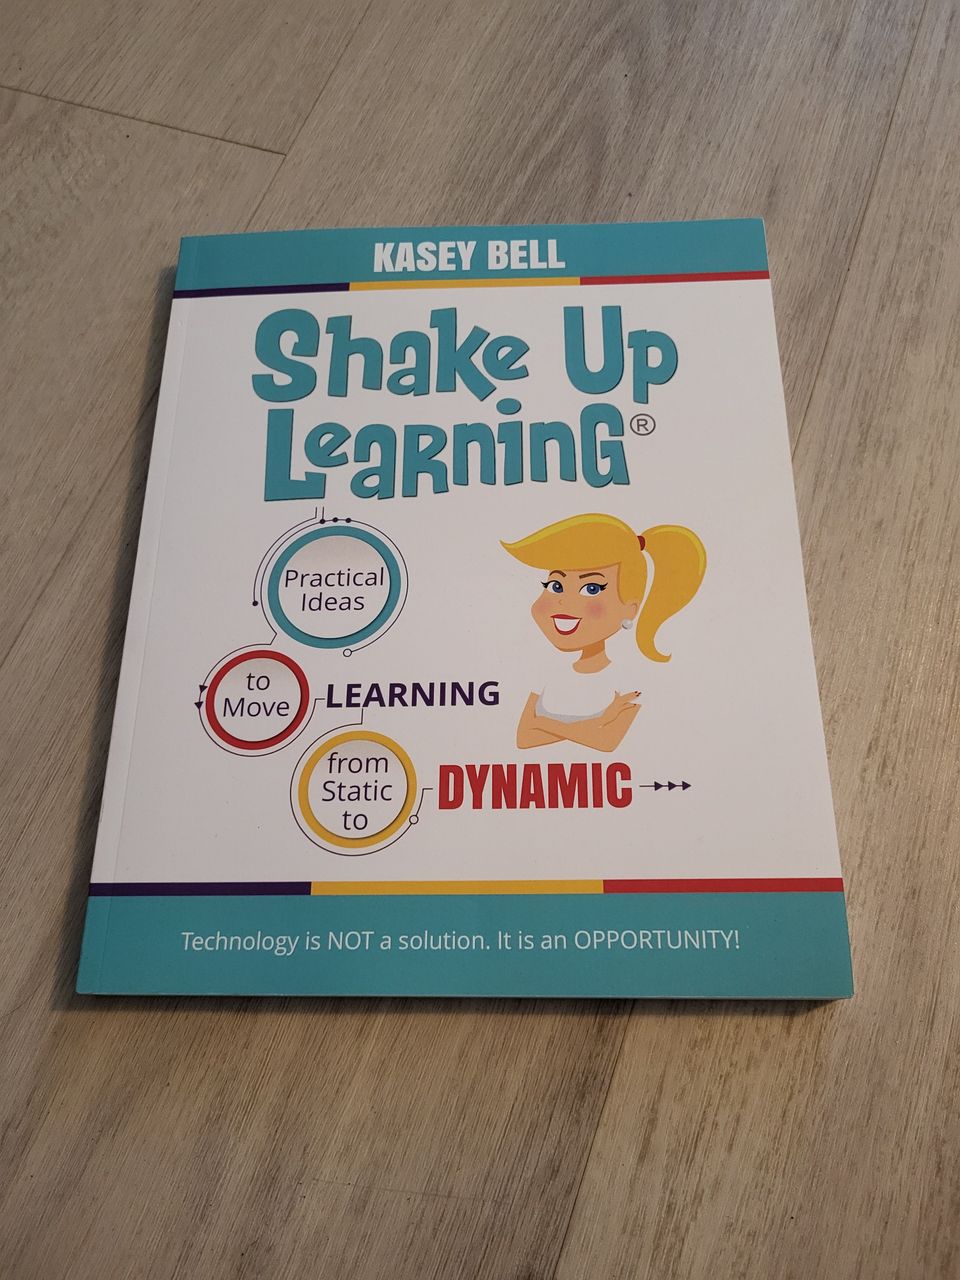 Kasey Bell: Shake Up Learning